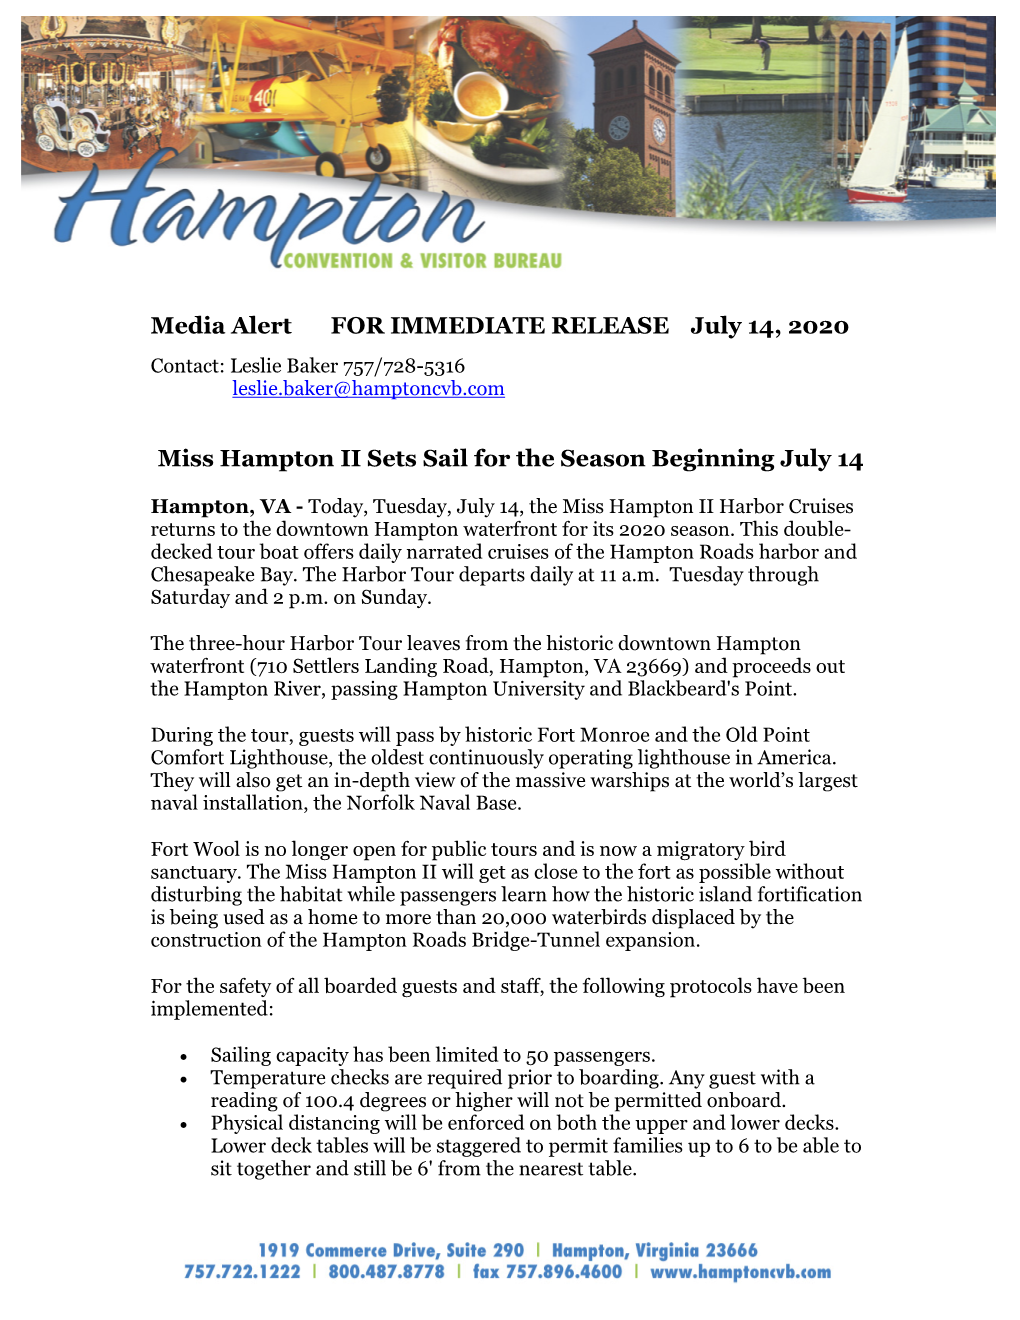 Miss Hampton II Sets Sail for the Season Beginning July 14